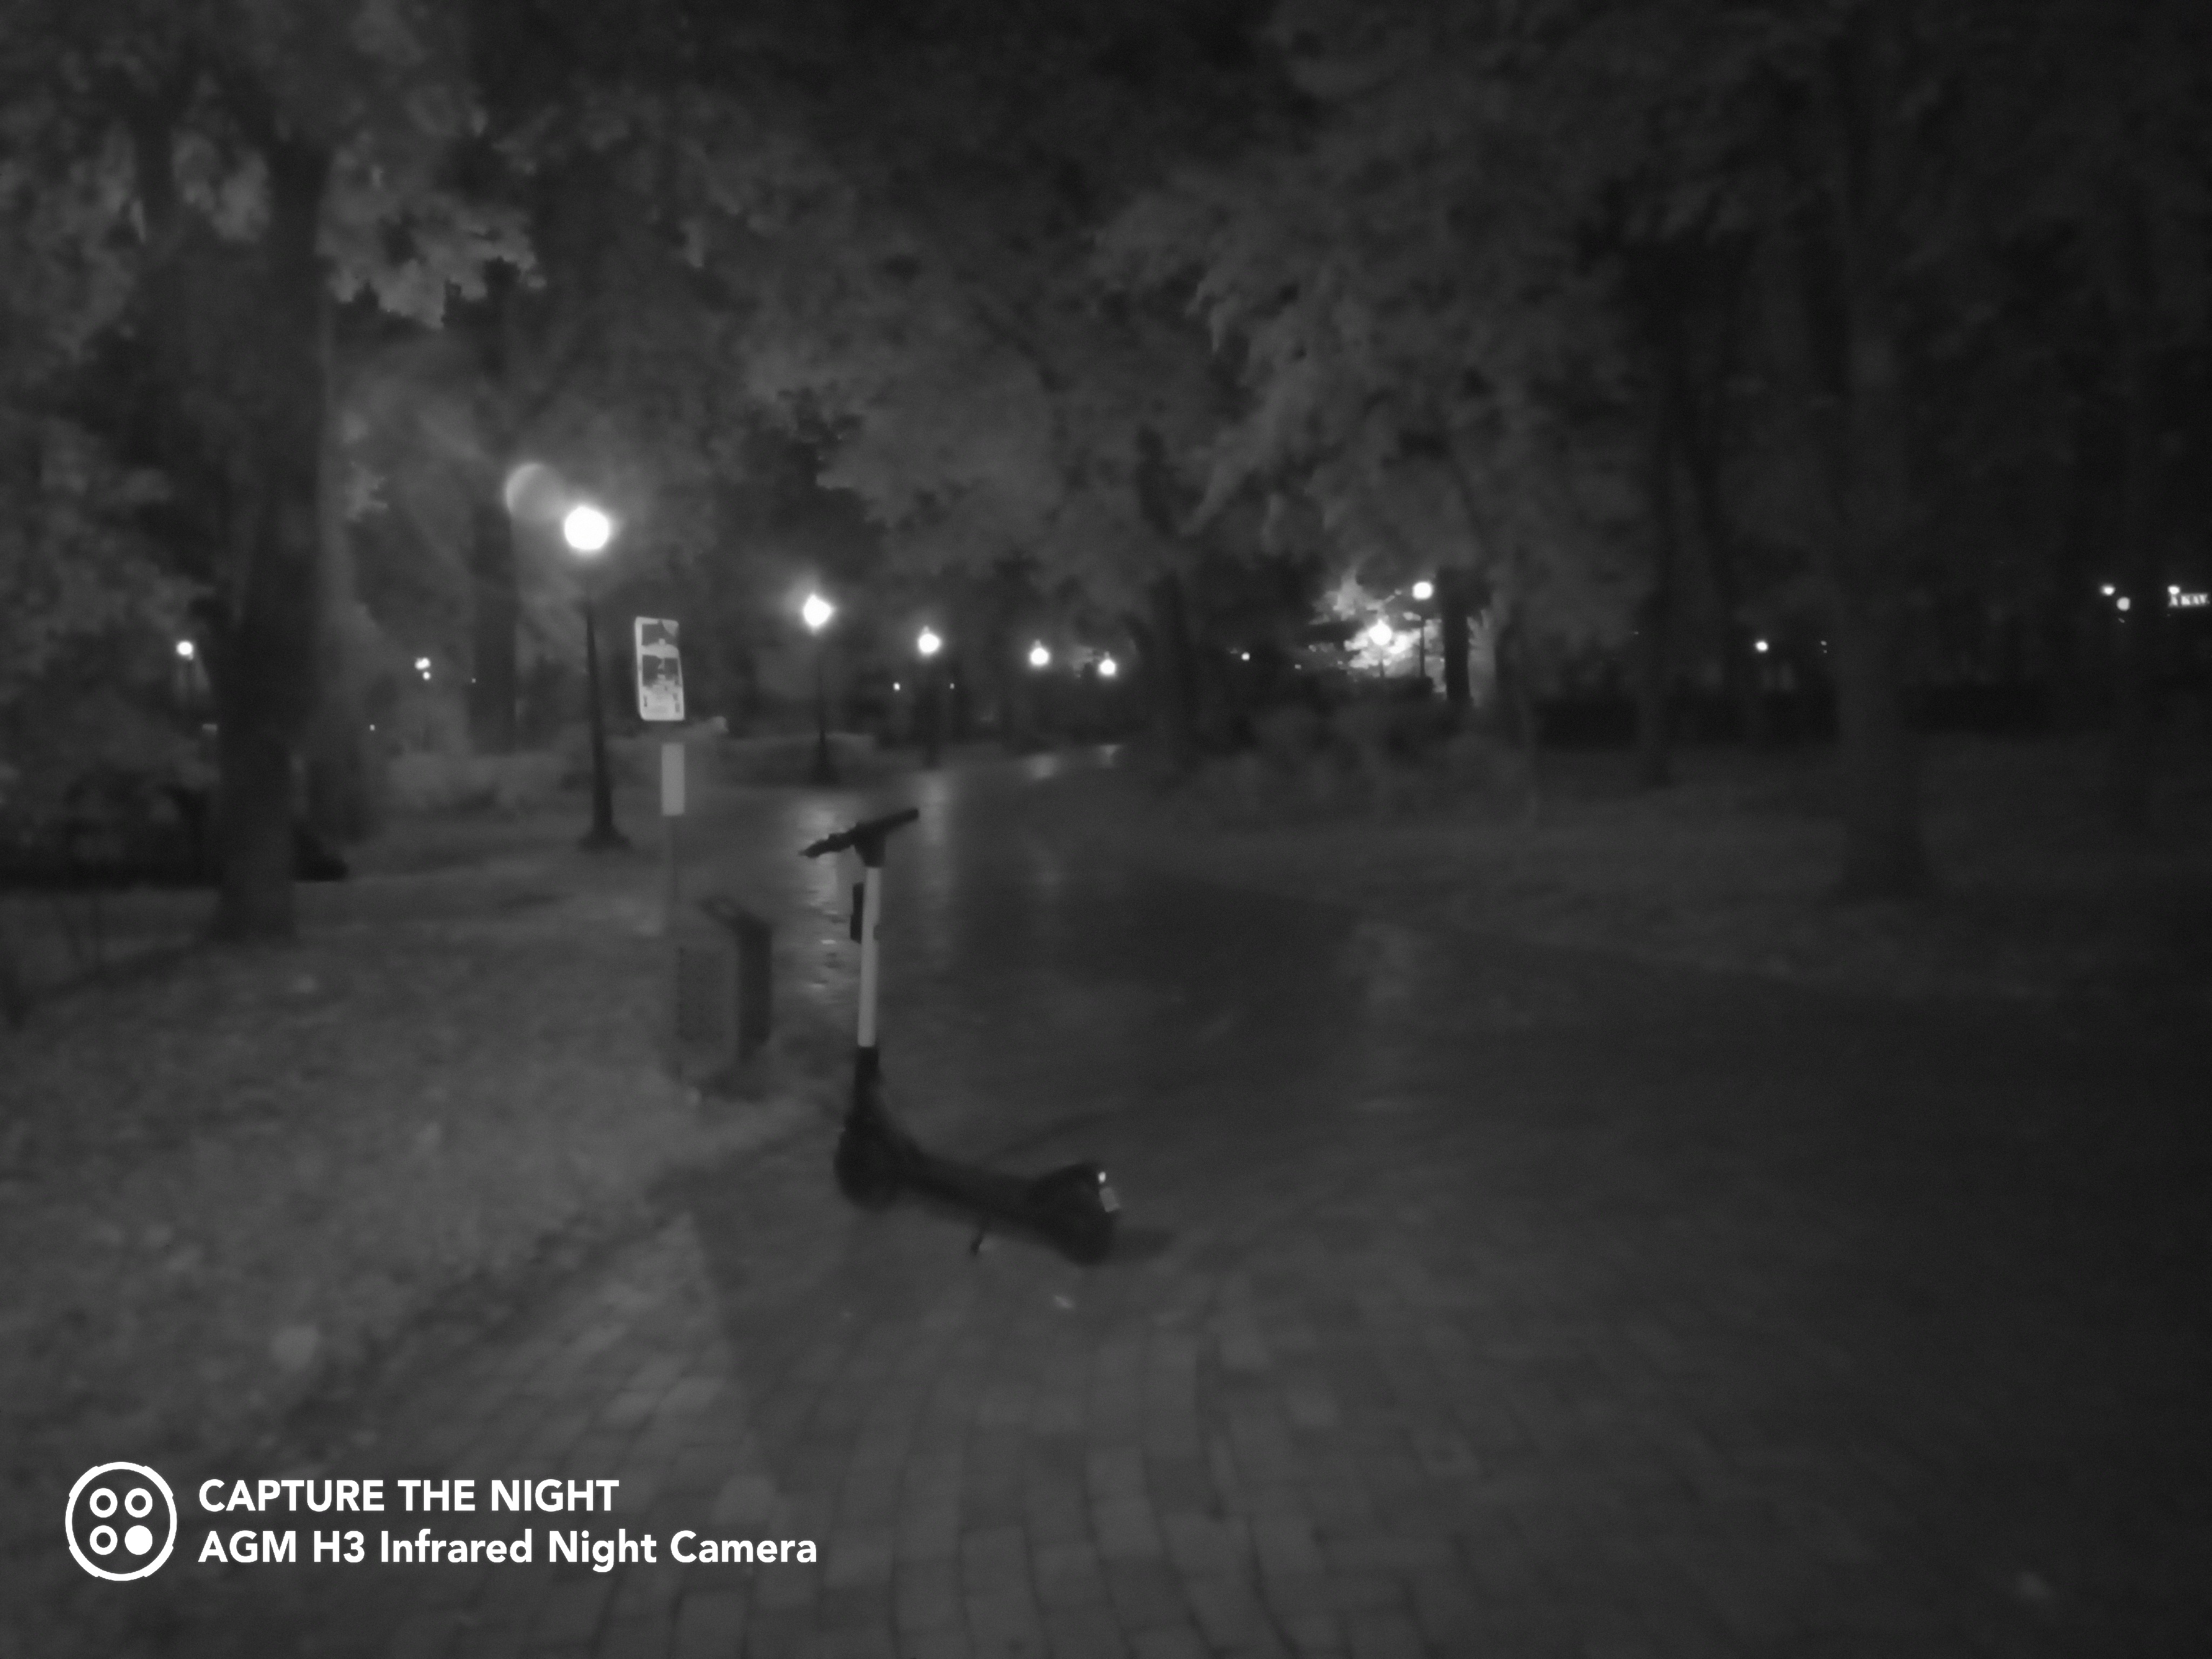 Recensione AGM H3: smartphone rugged con fotocamera per la visione notturna -179